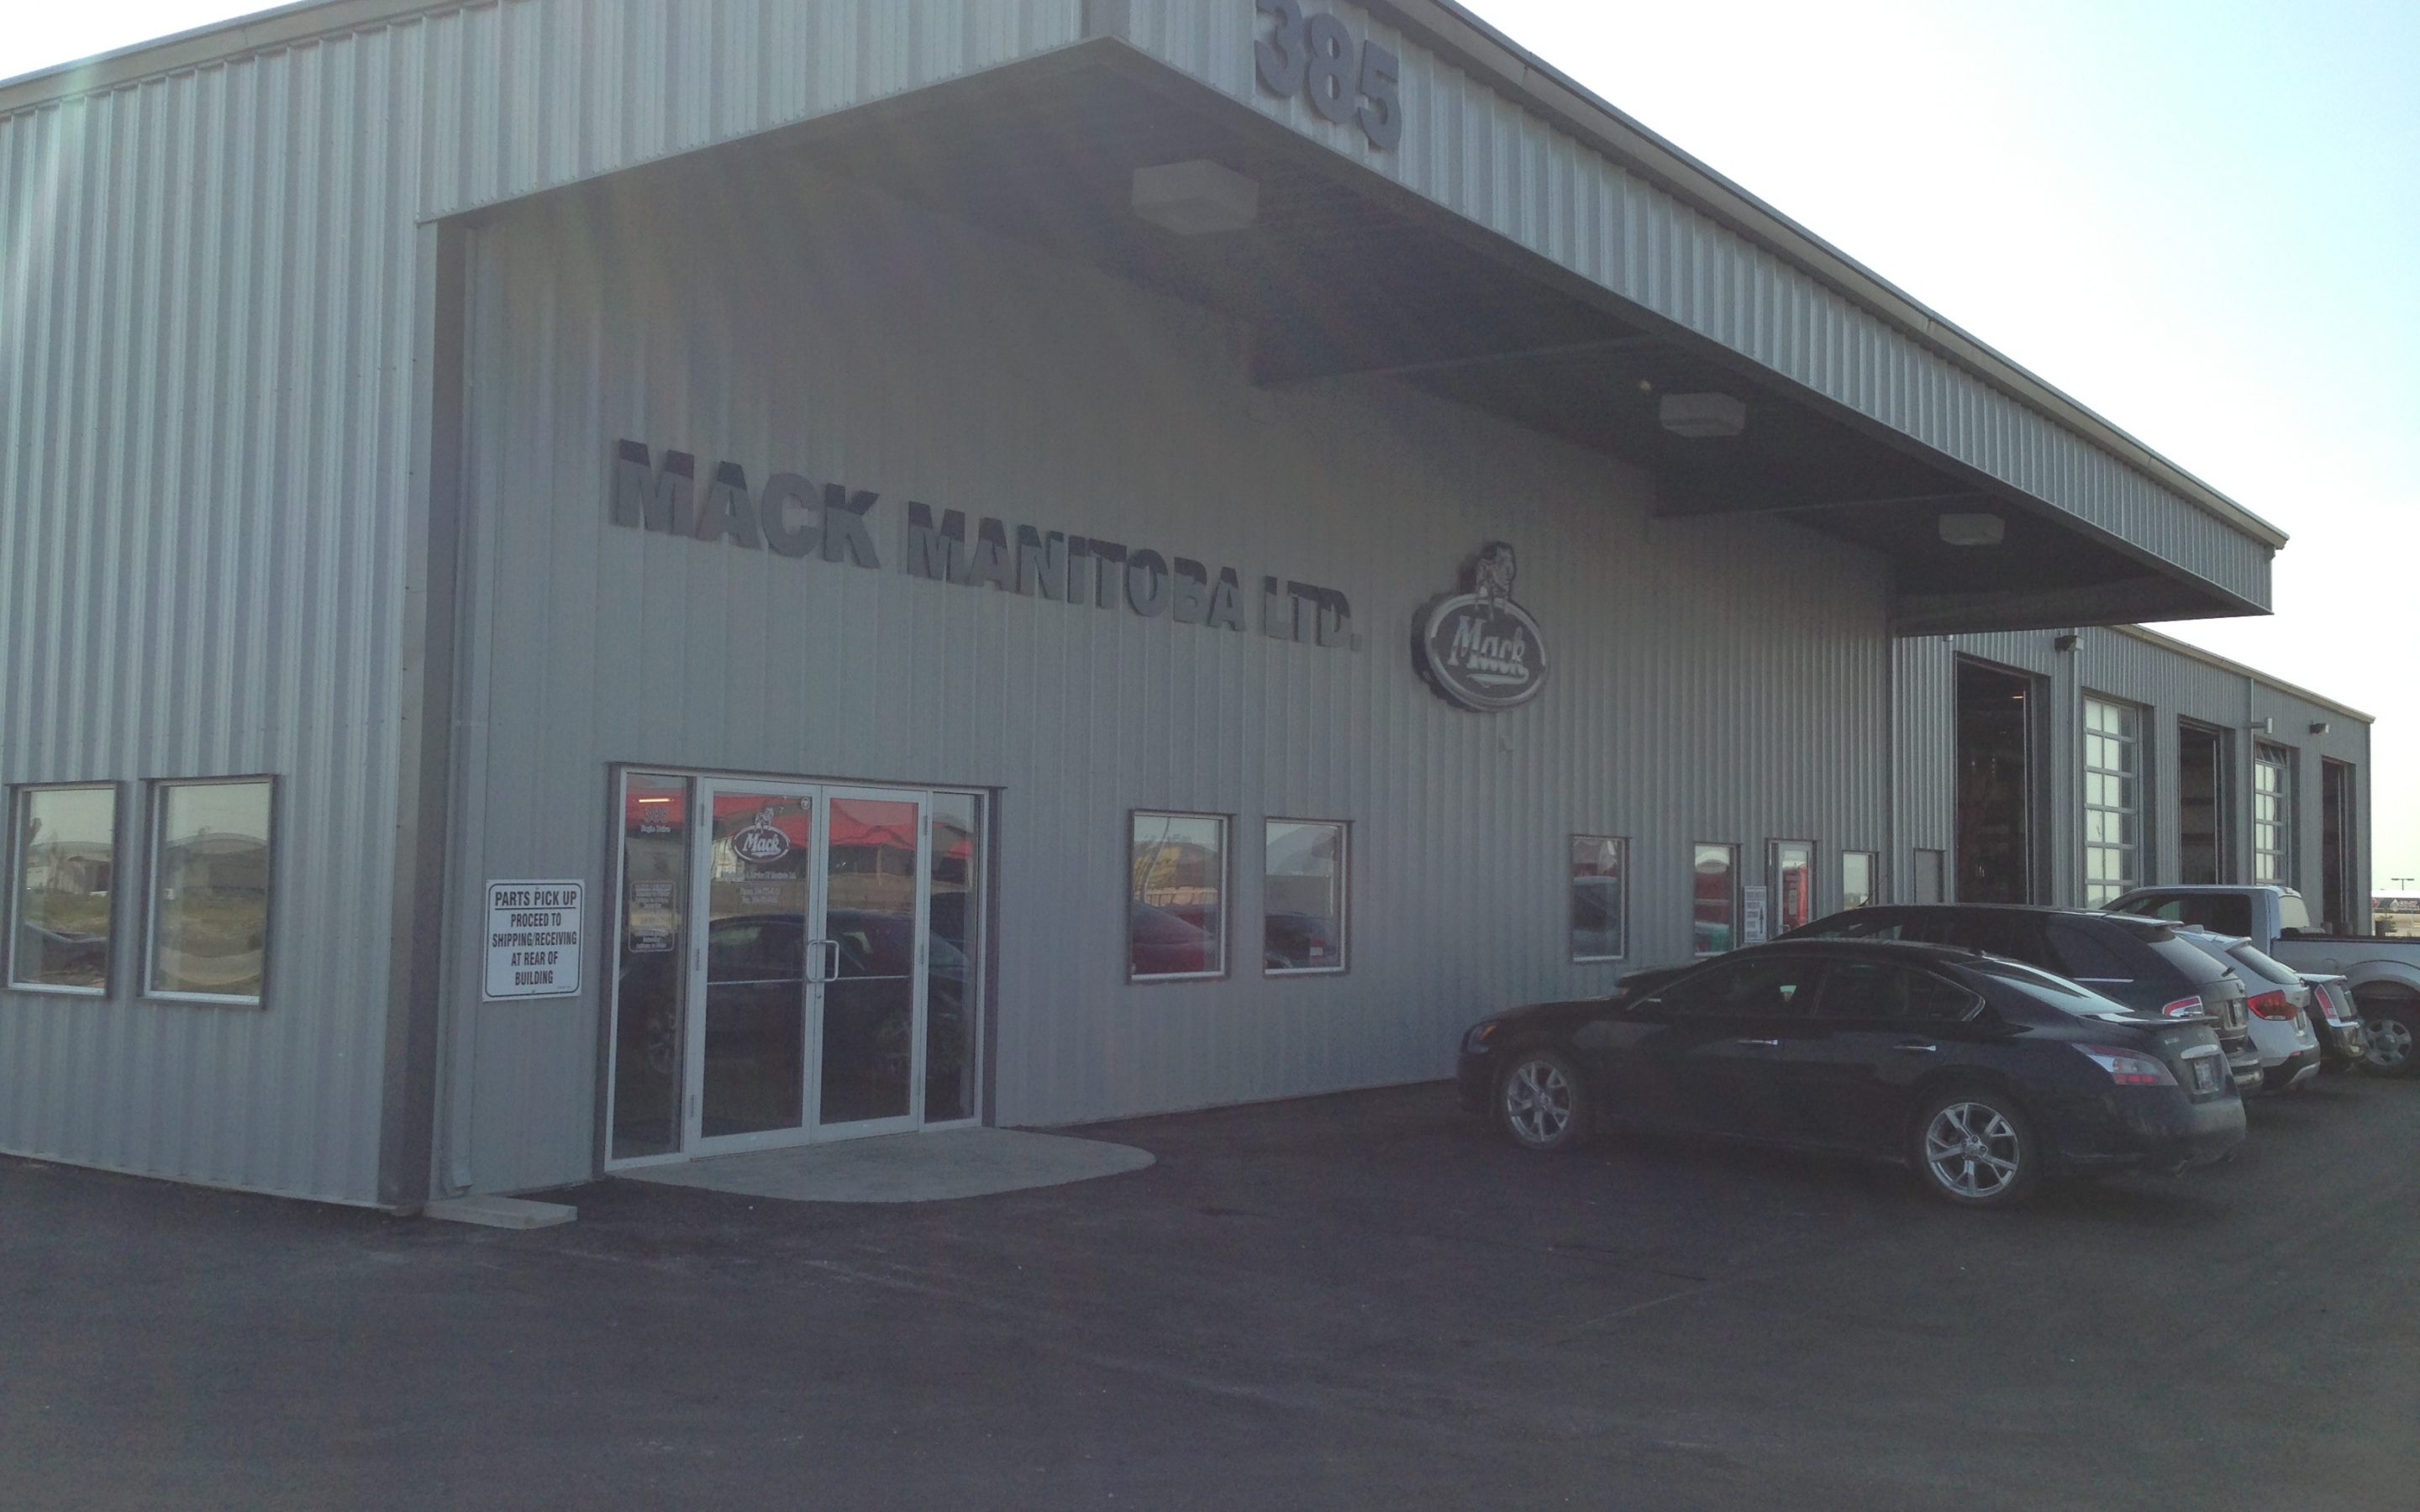 Mack Sales & Service New Dealership - Ernst Hansch Construction Ltd.